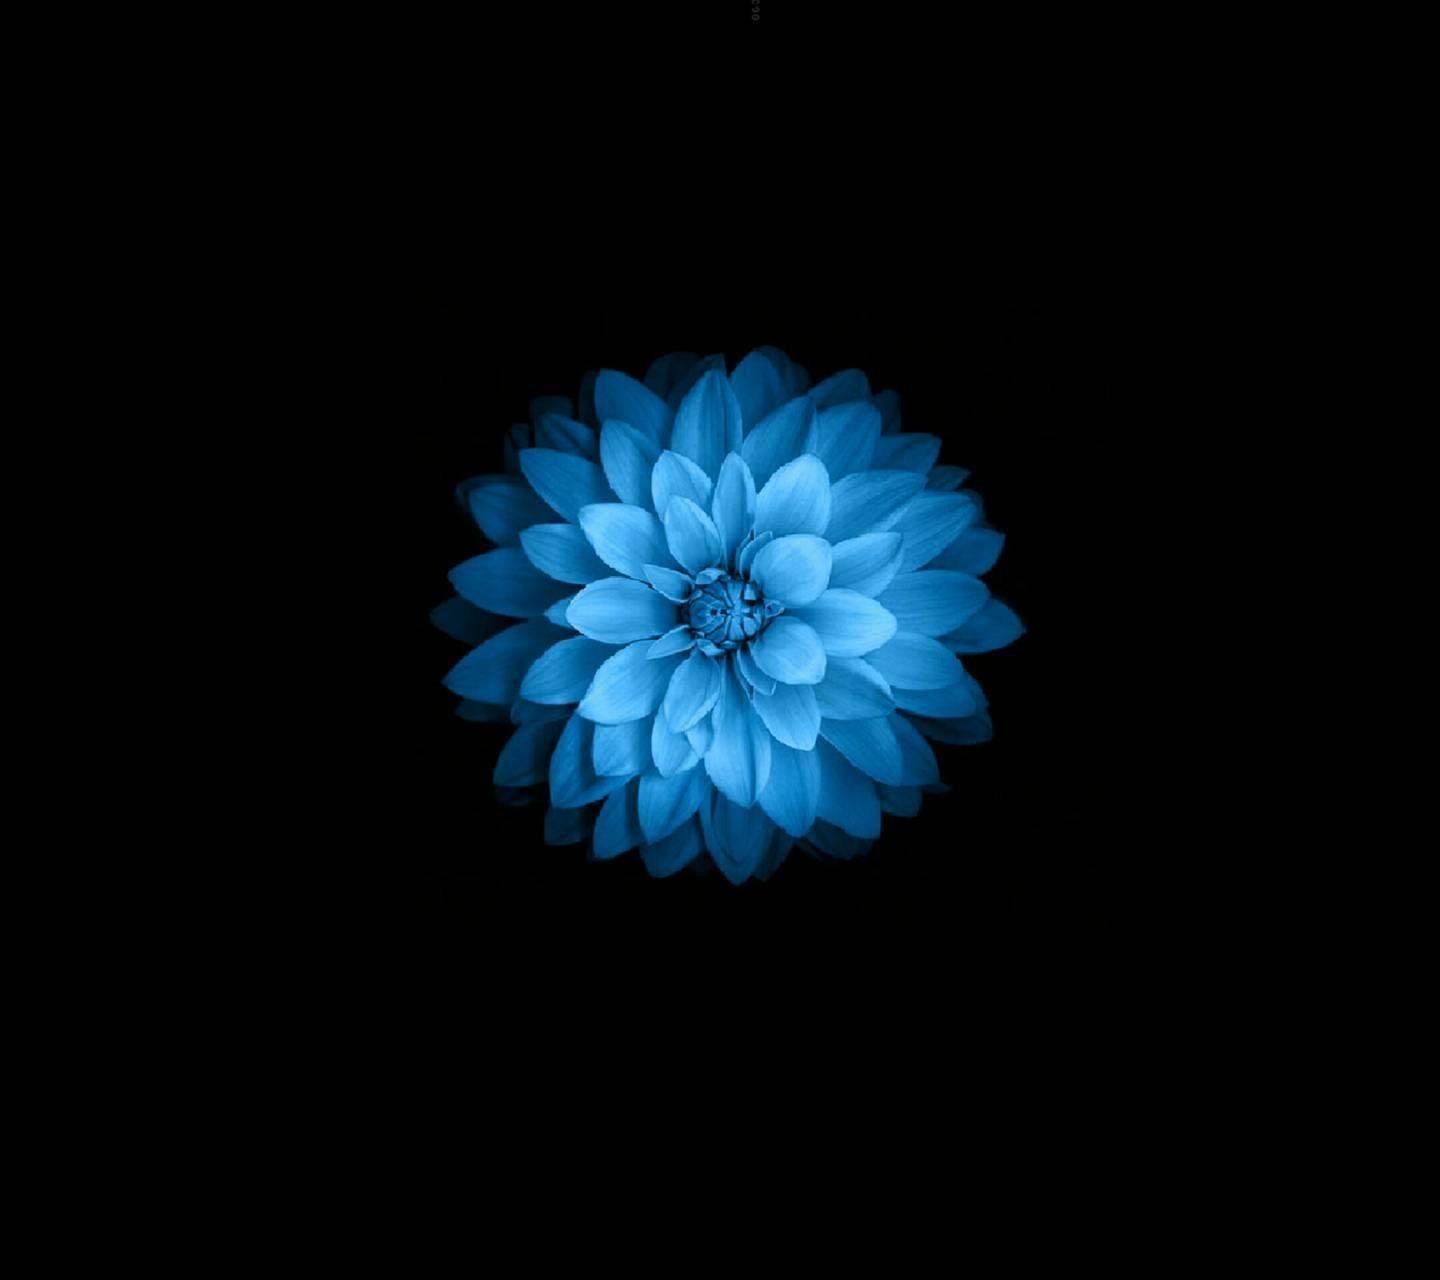 Black Blue Flower Wallpapers - Top Free Black Blue Flower Backgrounds ...